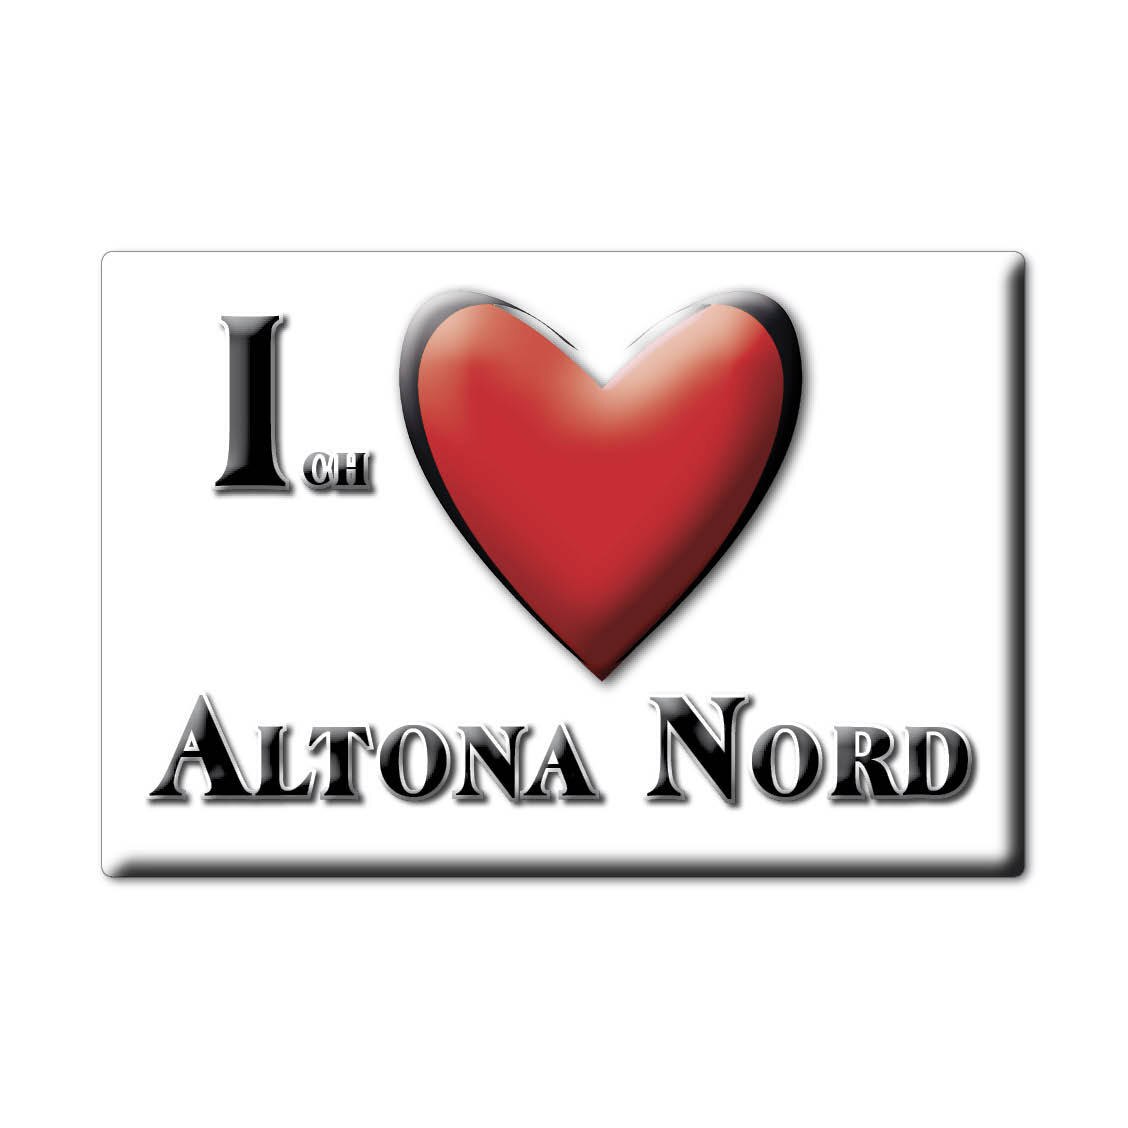 Altona Noord Magneet Magneet Hamburg (Hh) Duitsland Koelkastmagneet Souvenir Ik Liefde